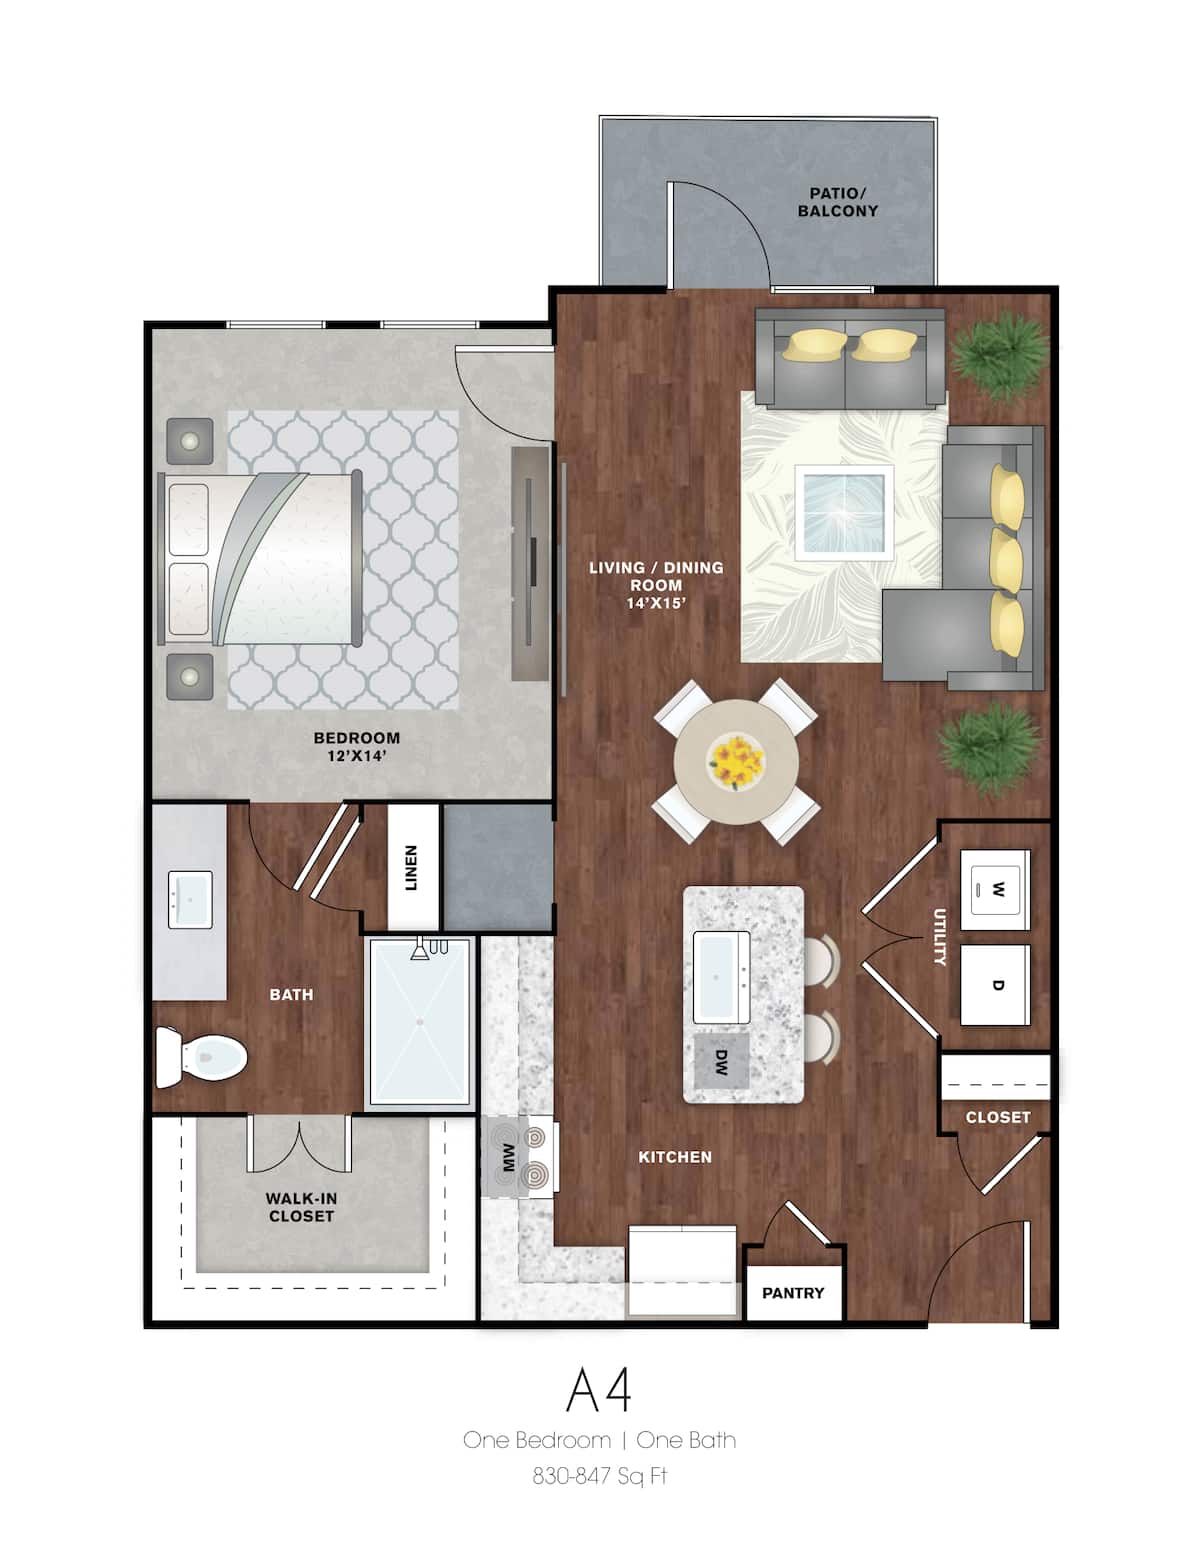 Floorplan diagram for A17, showing 1 bedroom